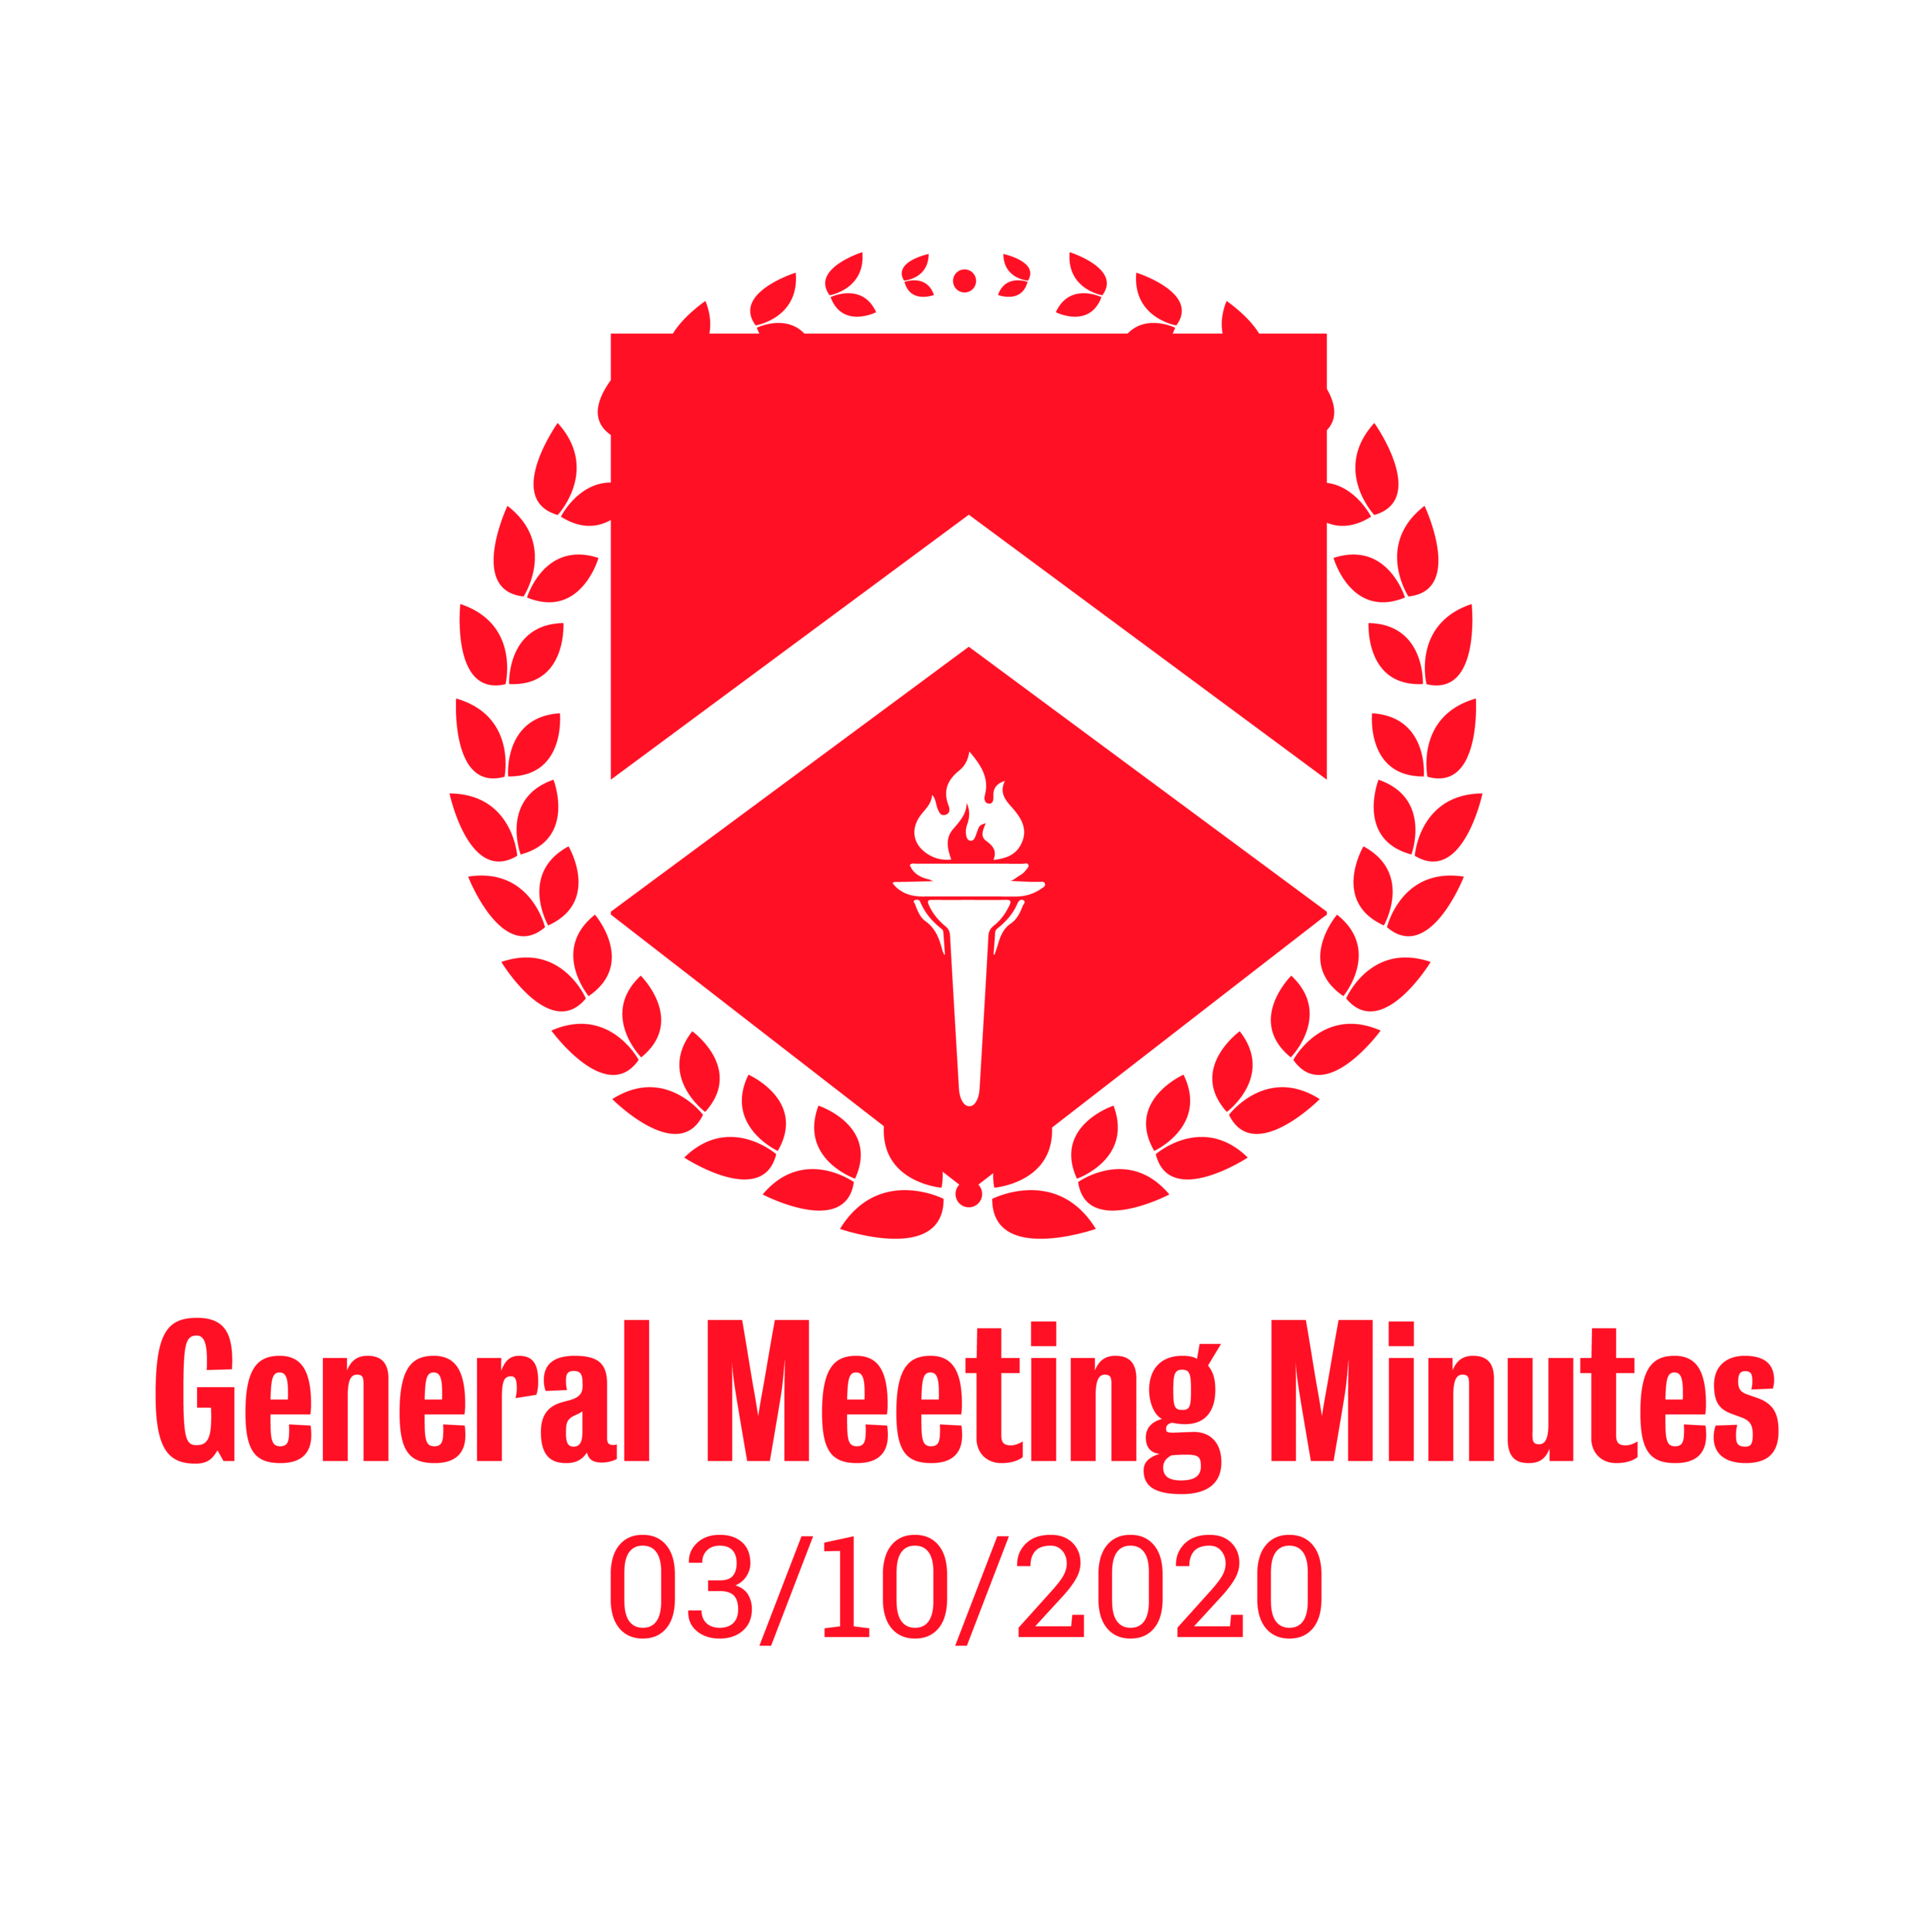 General Meeting Minutes 03/10/2020